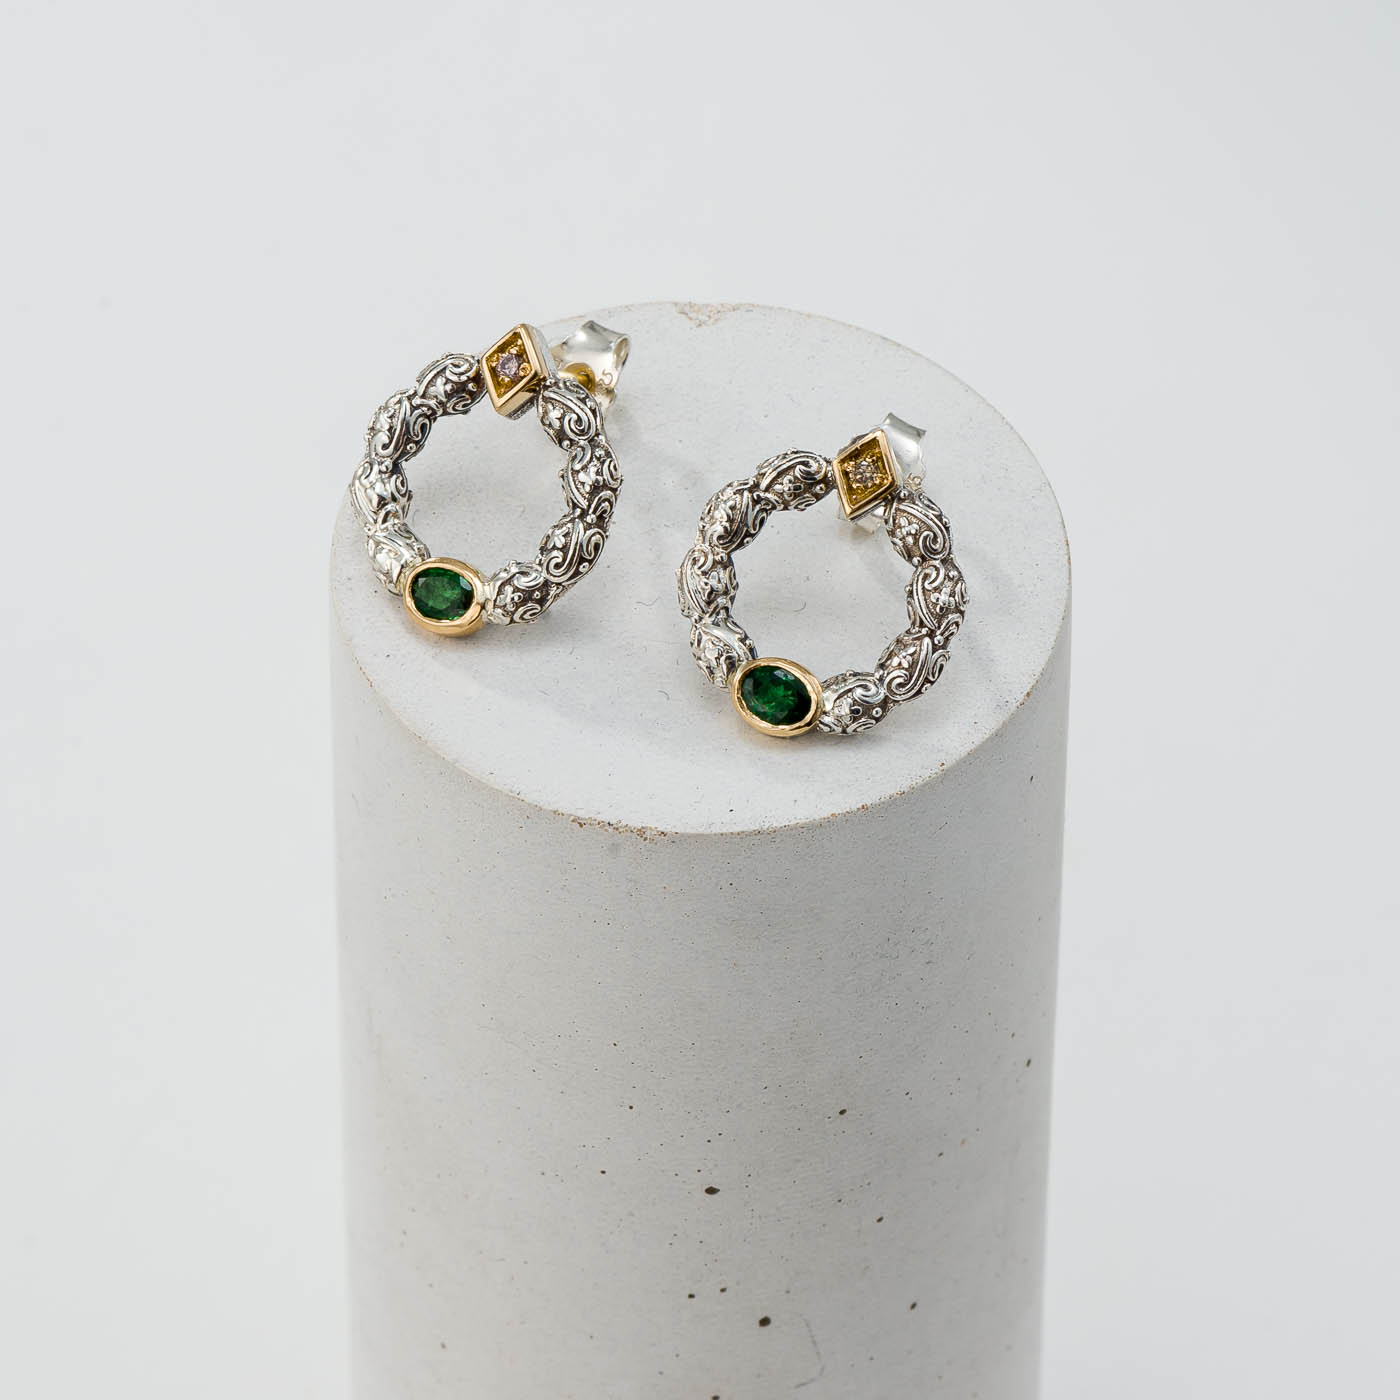 Eve stud cycle earrings in 18K Gold Sterling silver and Gemstones